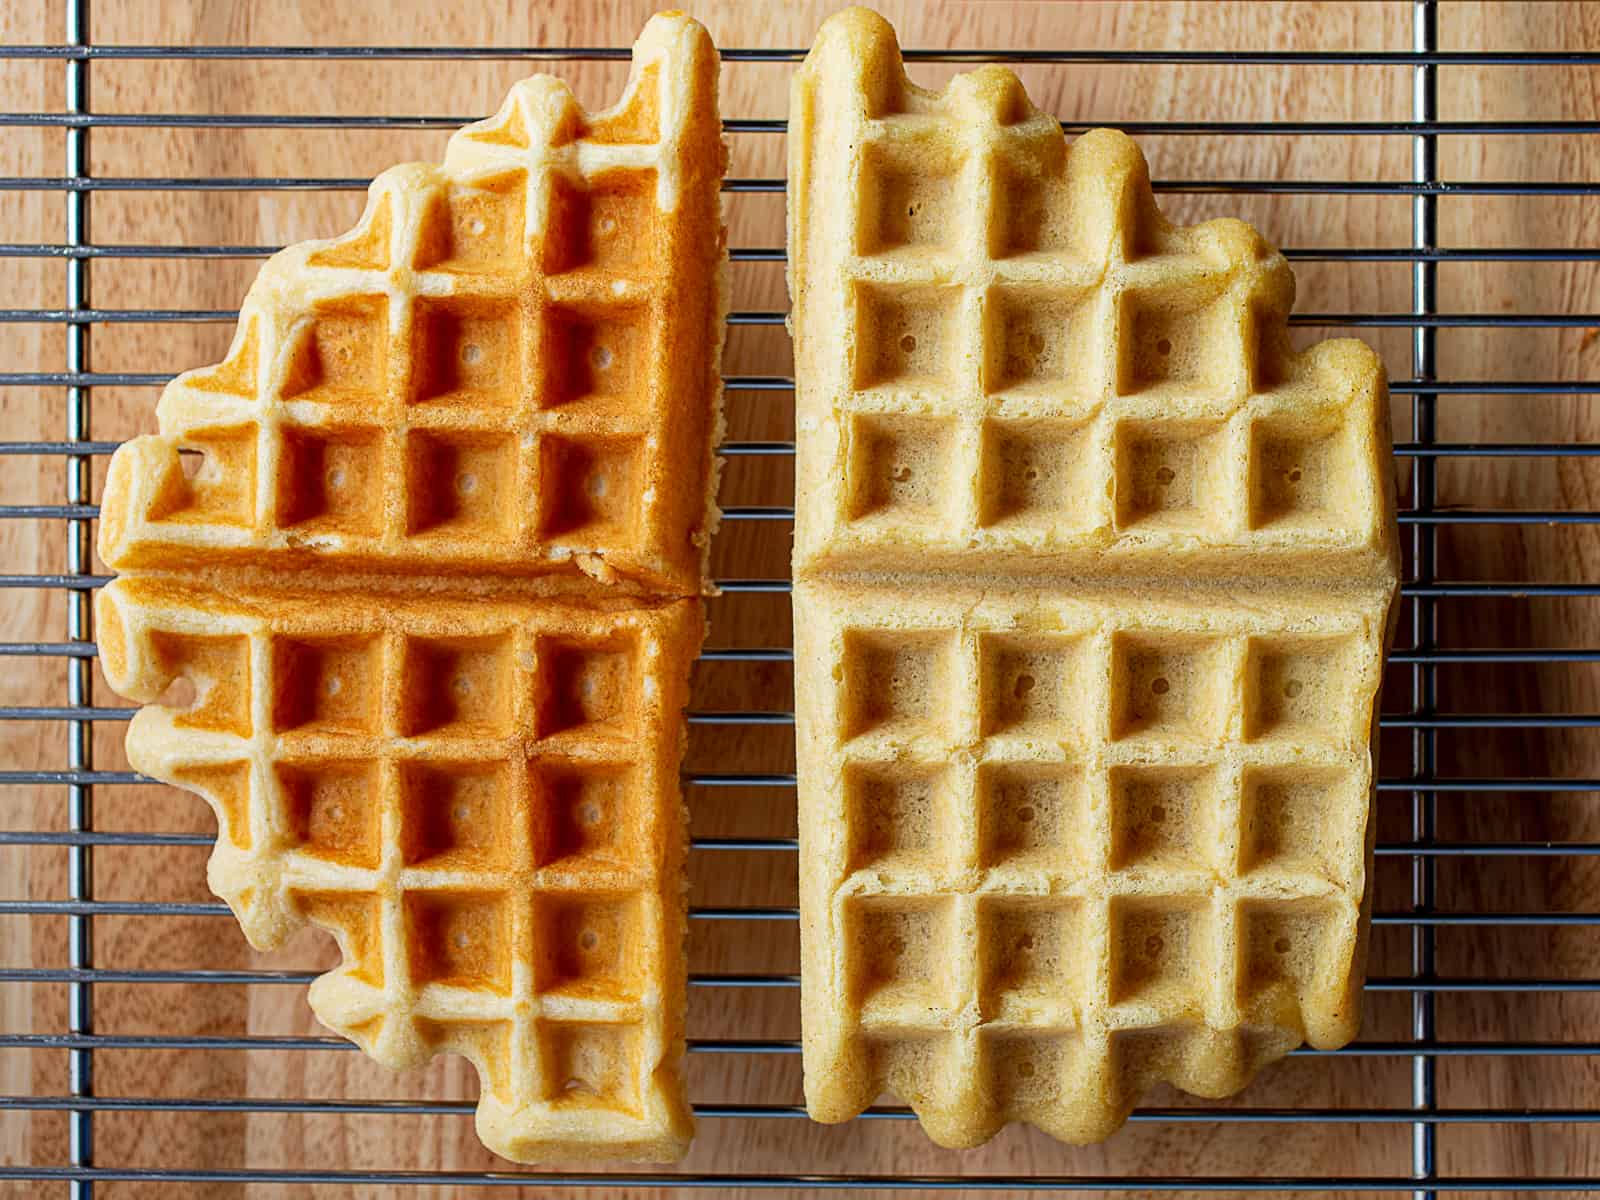 Gluten-free waffle on left. Gluten-free, egg-free, dairy-free waffle on right. The gluten-free, dairy-free, egg-free waffle is much lighter in color than the gluten-free waffle.